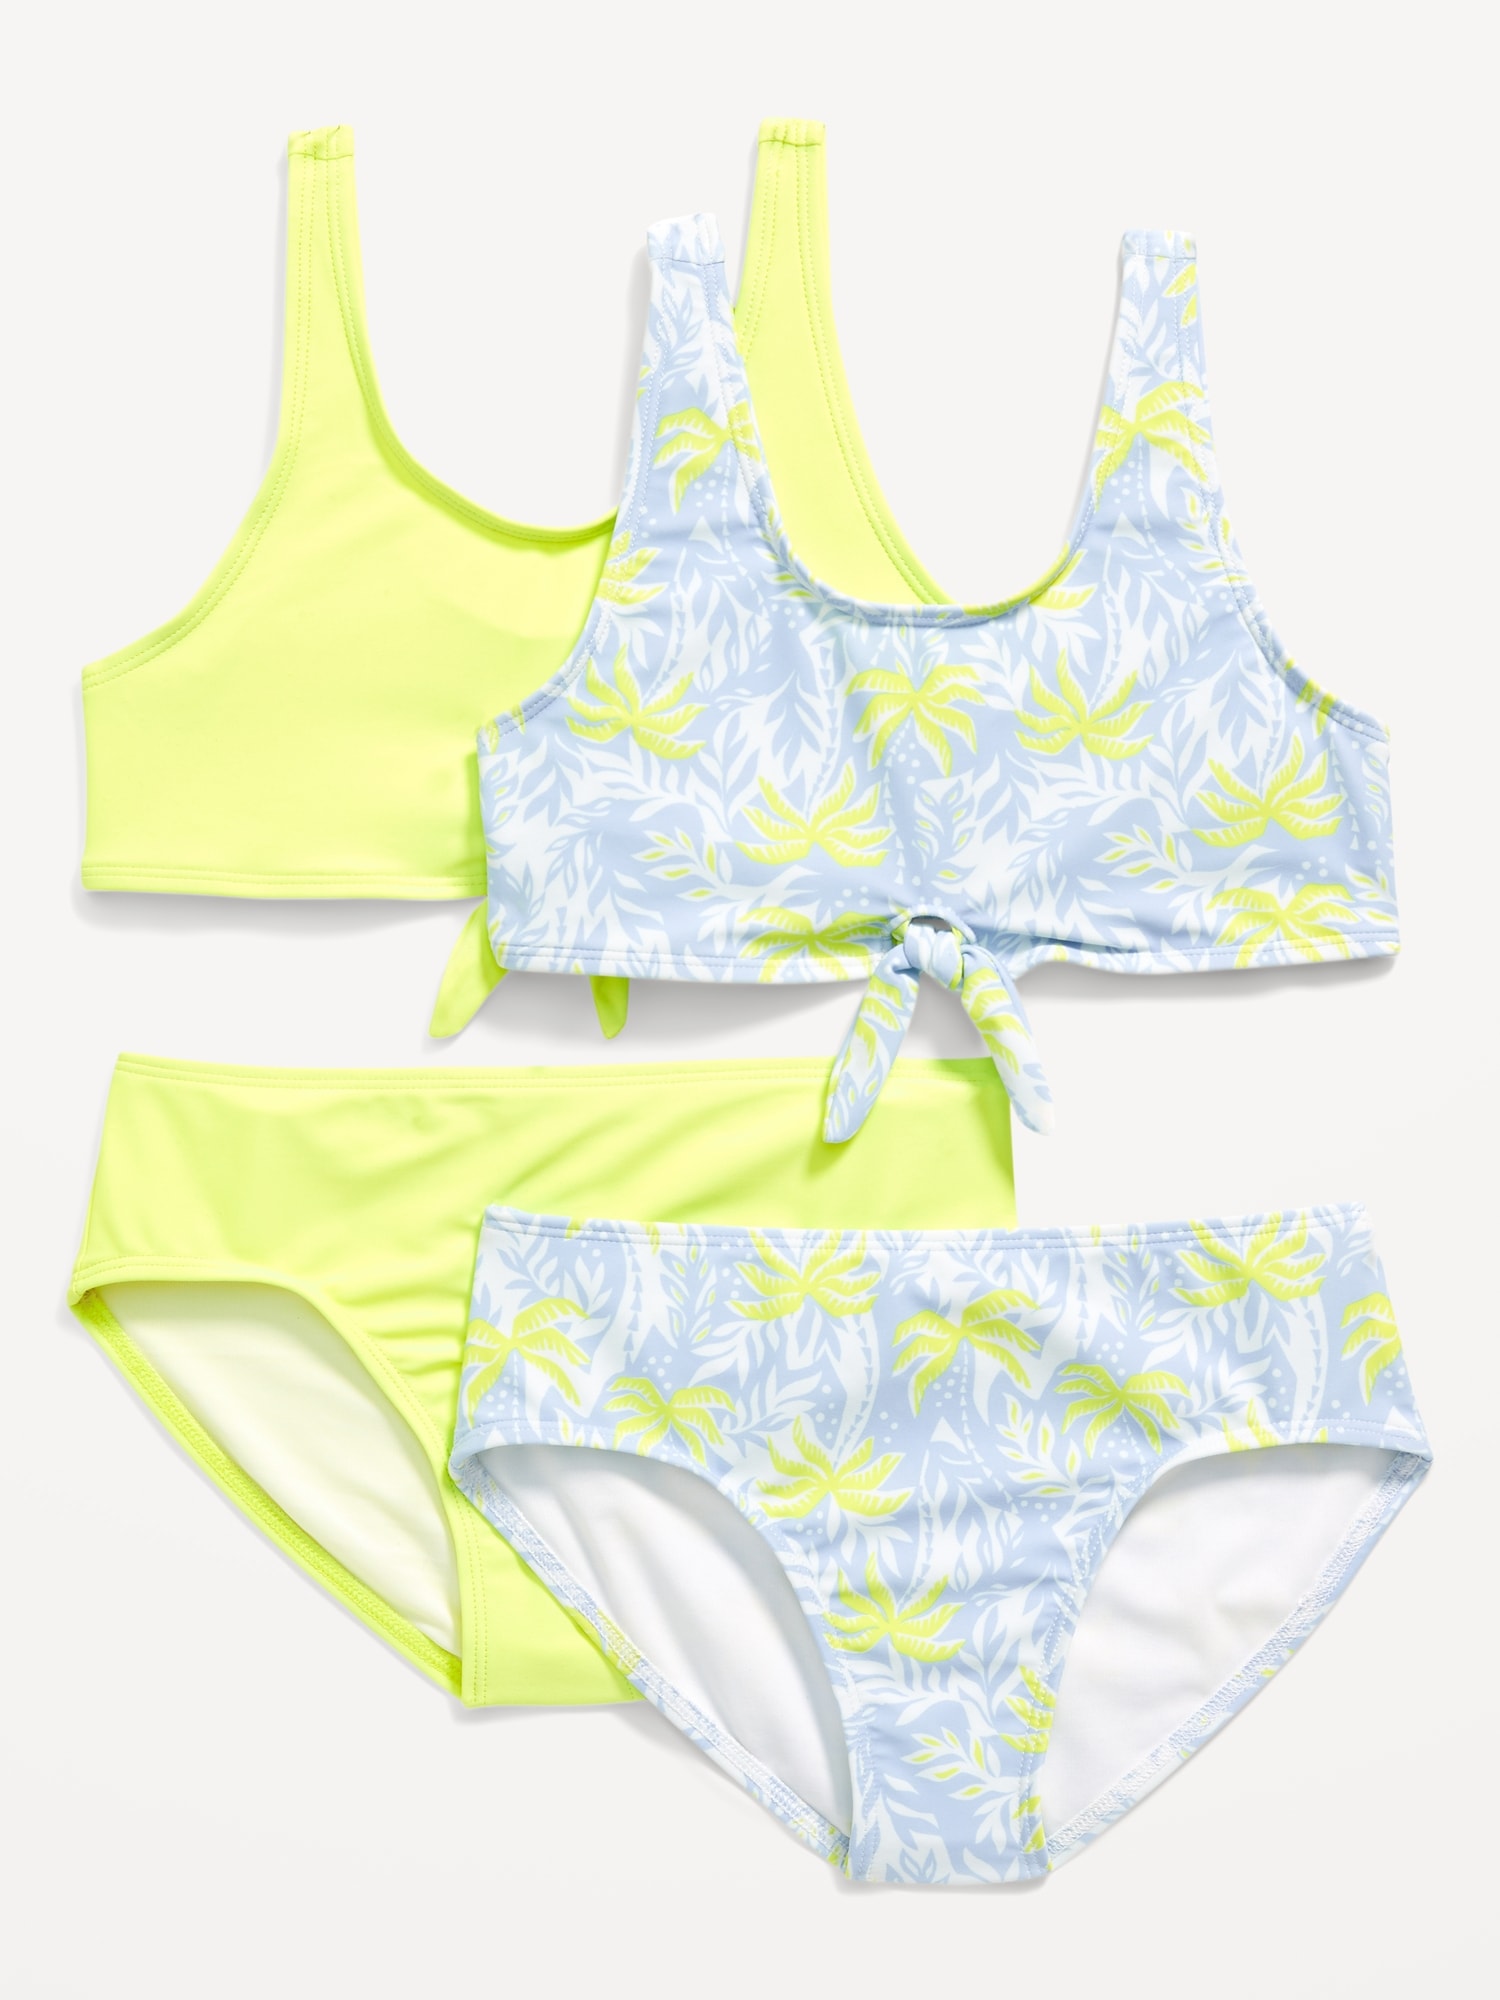 Tie-Front Bikini Swim Set 2-Pack for Girls Hot Deal